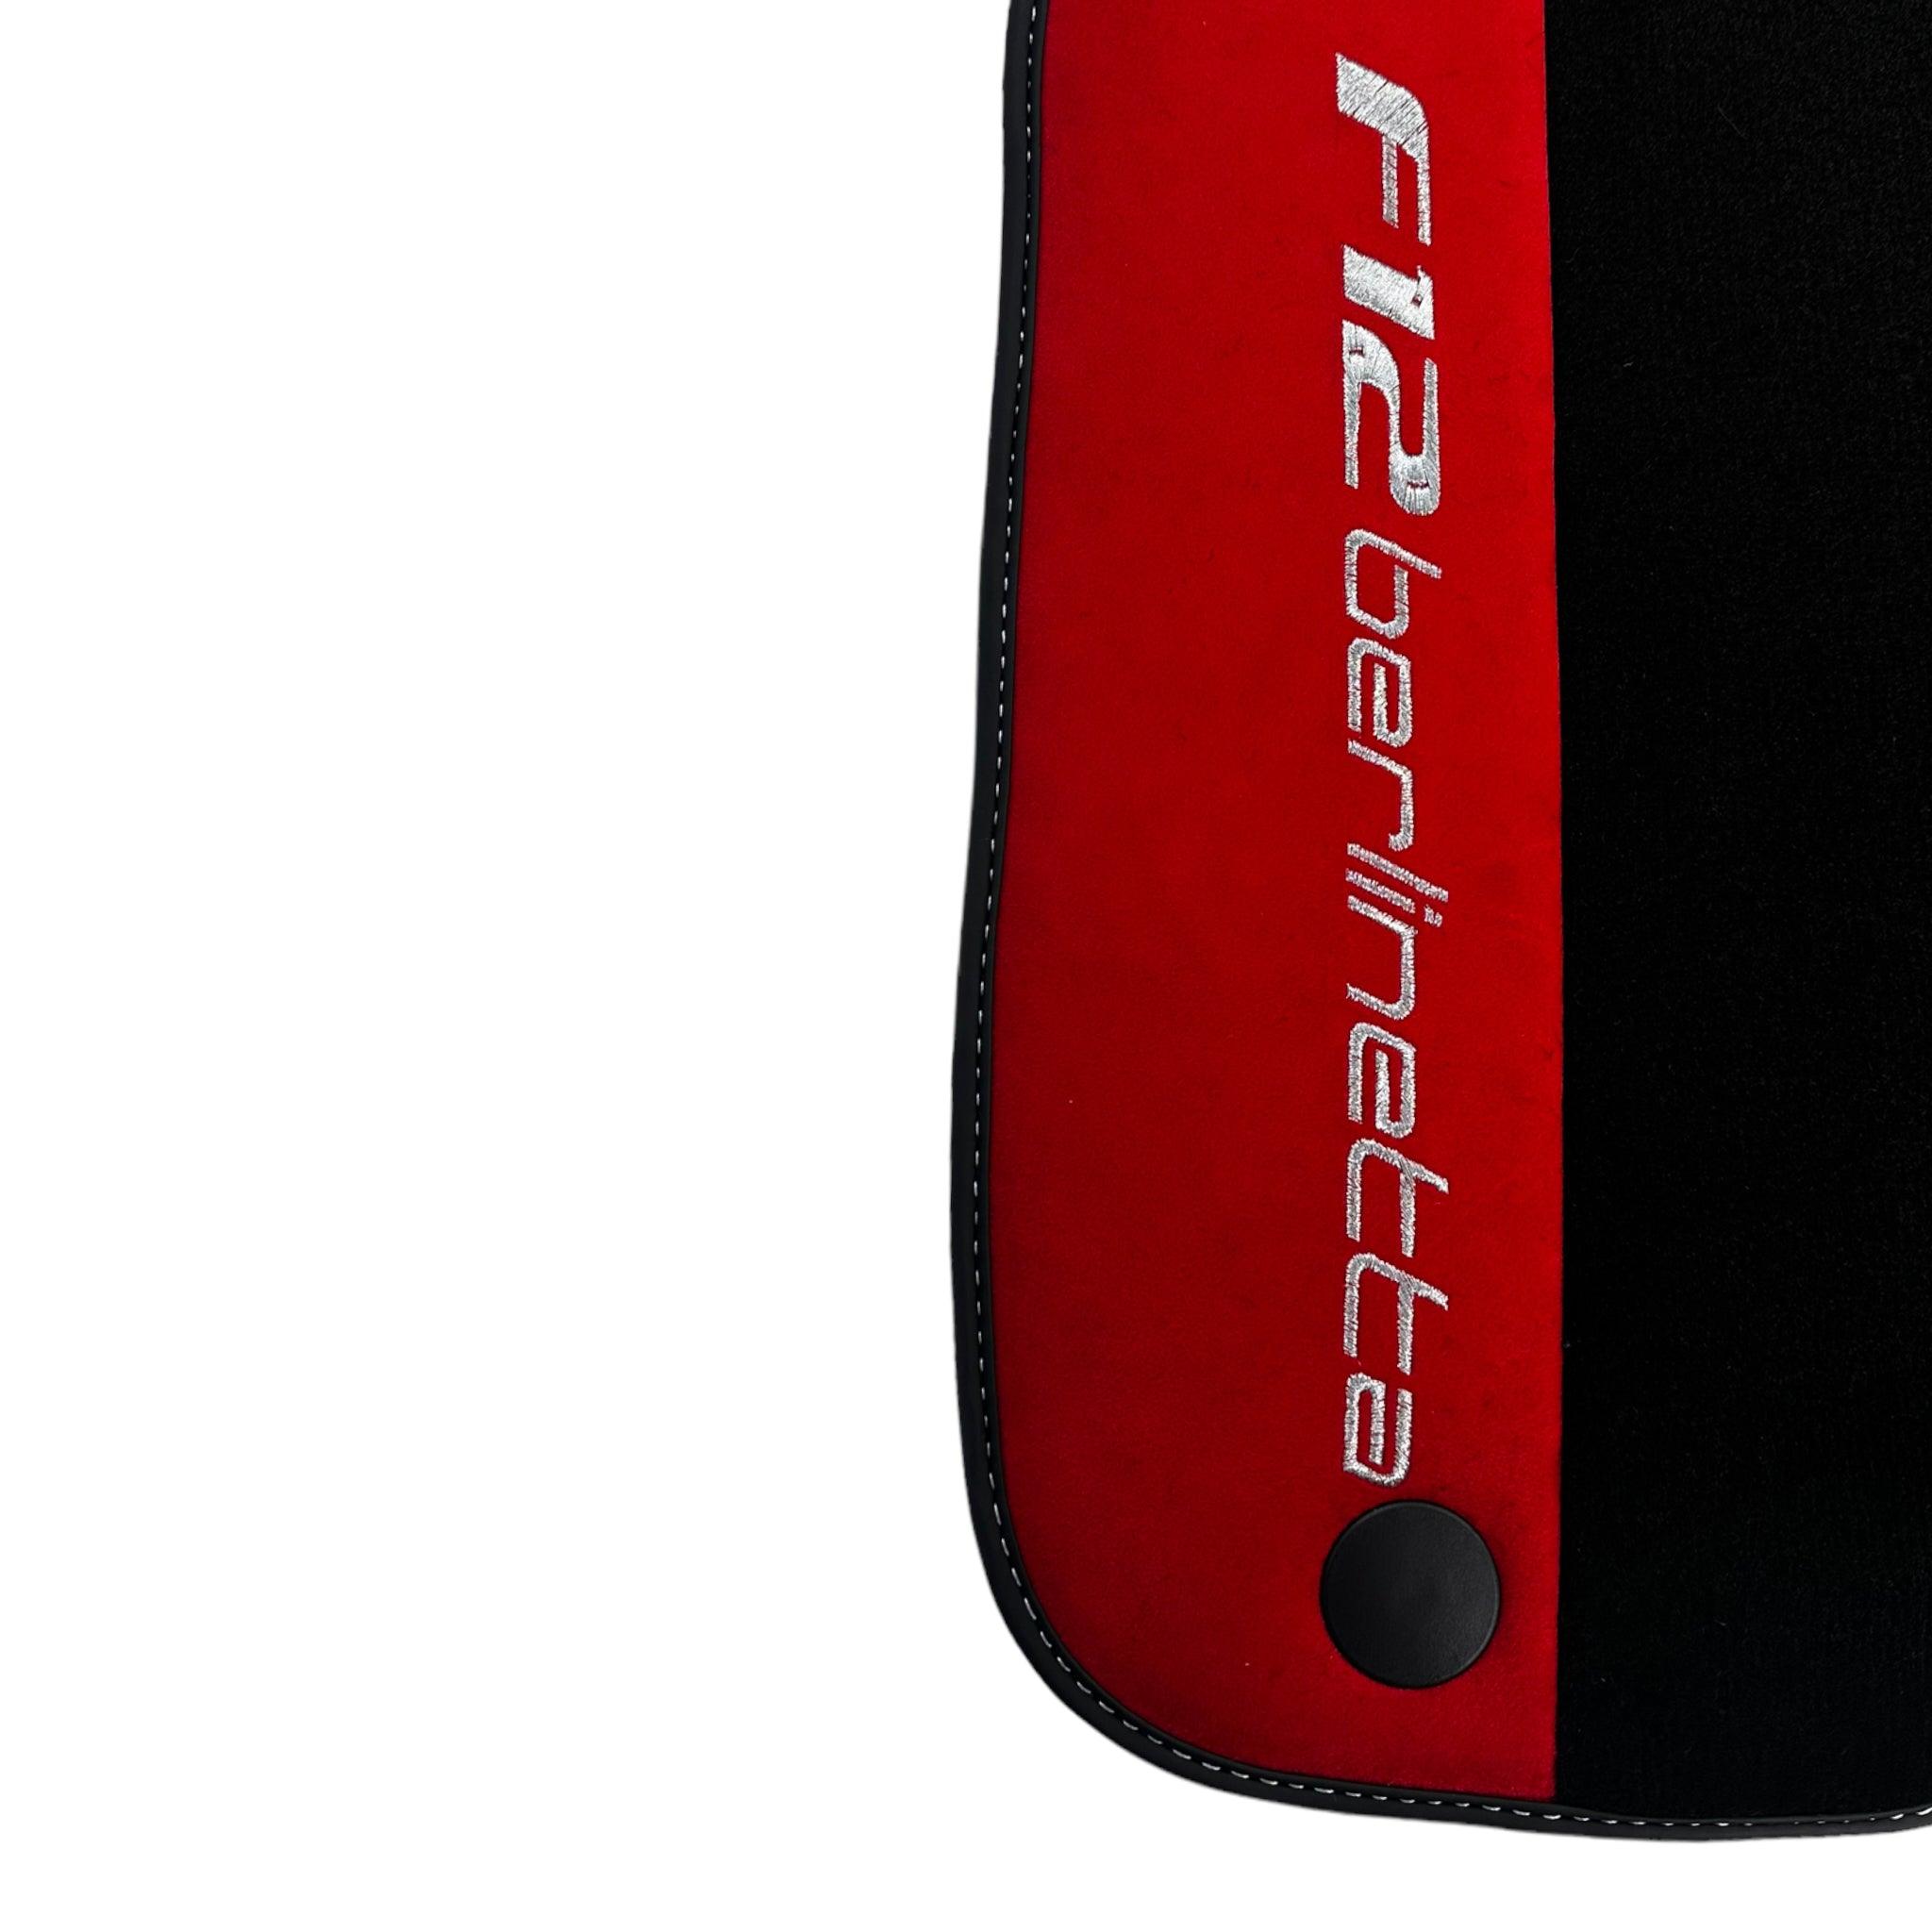 Black Floor Mats for Ferrari F12 Berlinetta (2012-2022) with Red Alcantara Leather